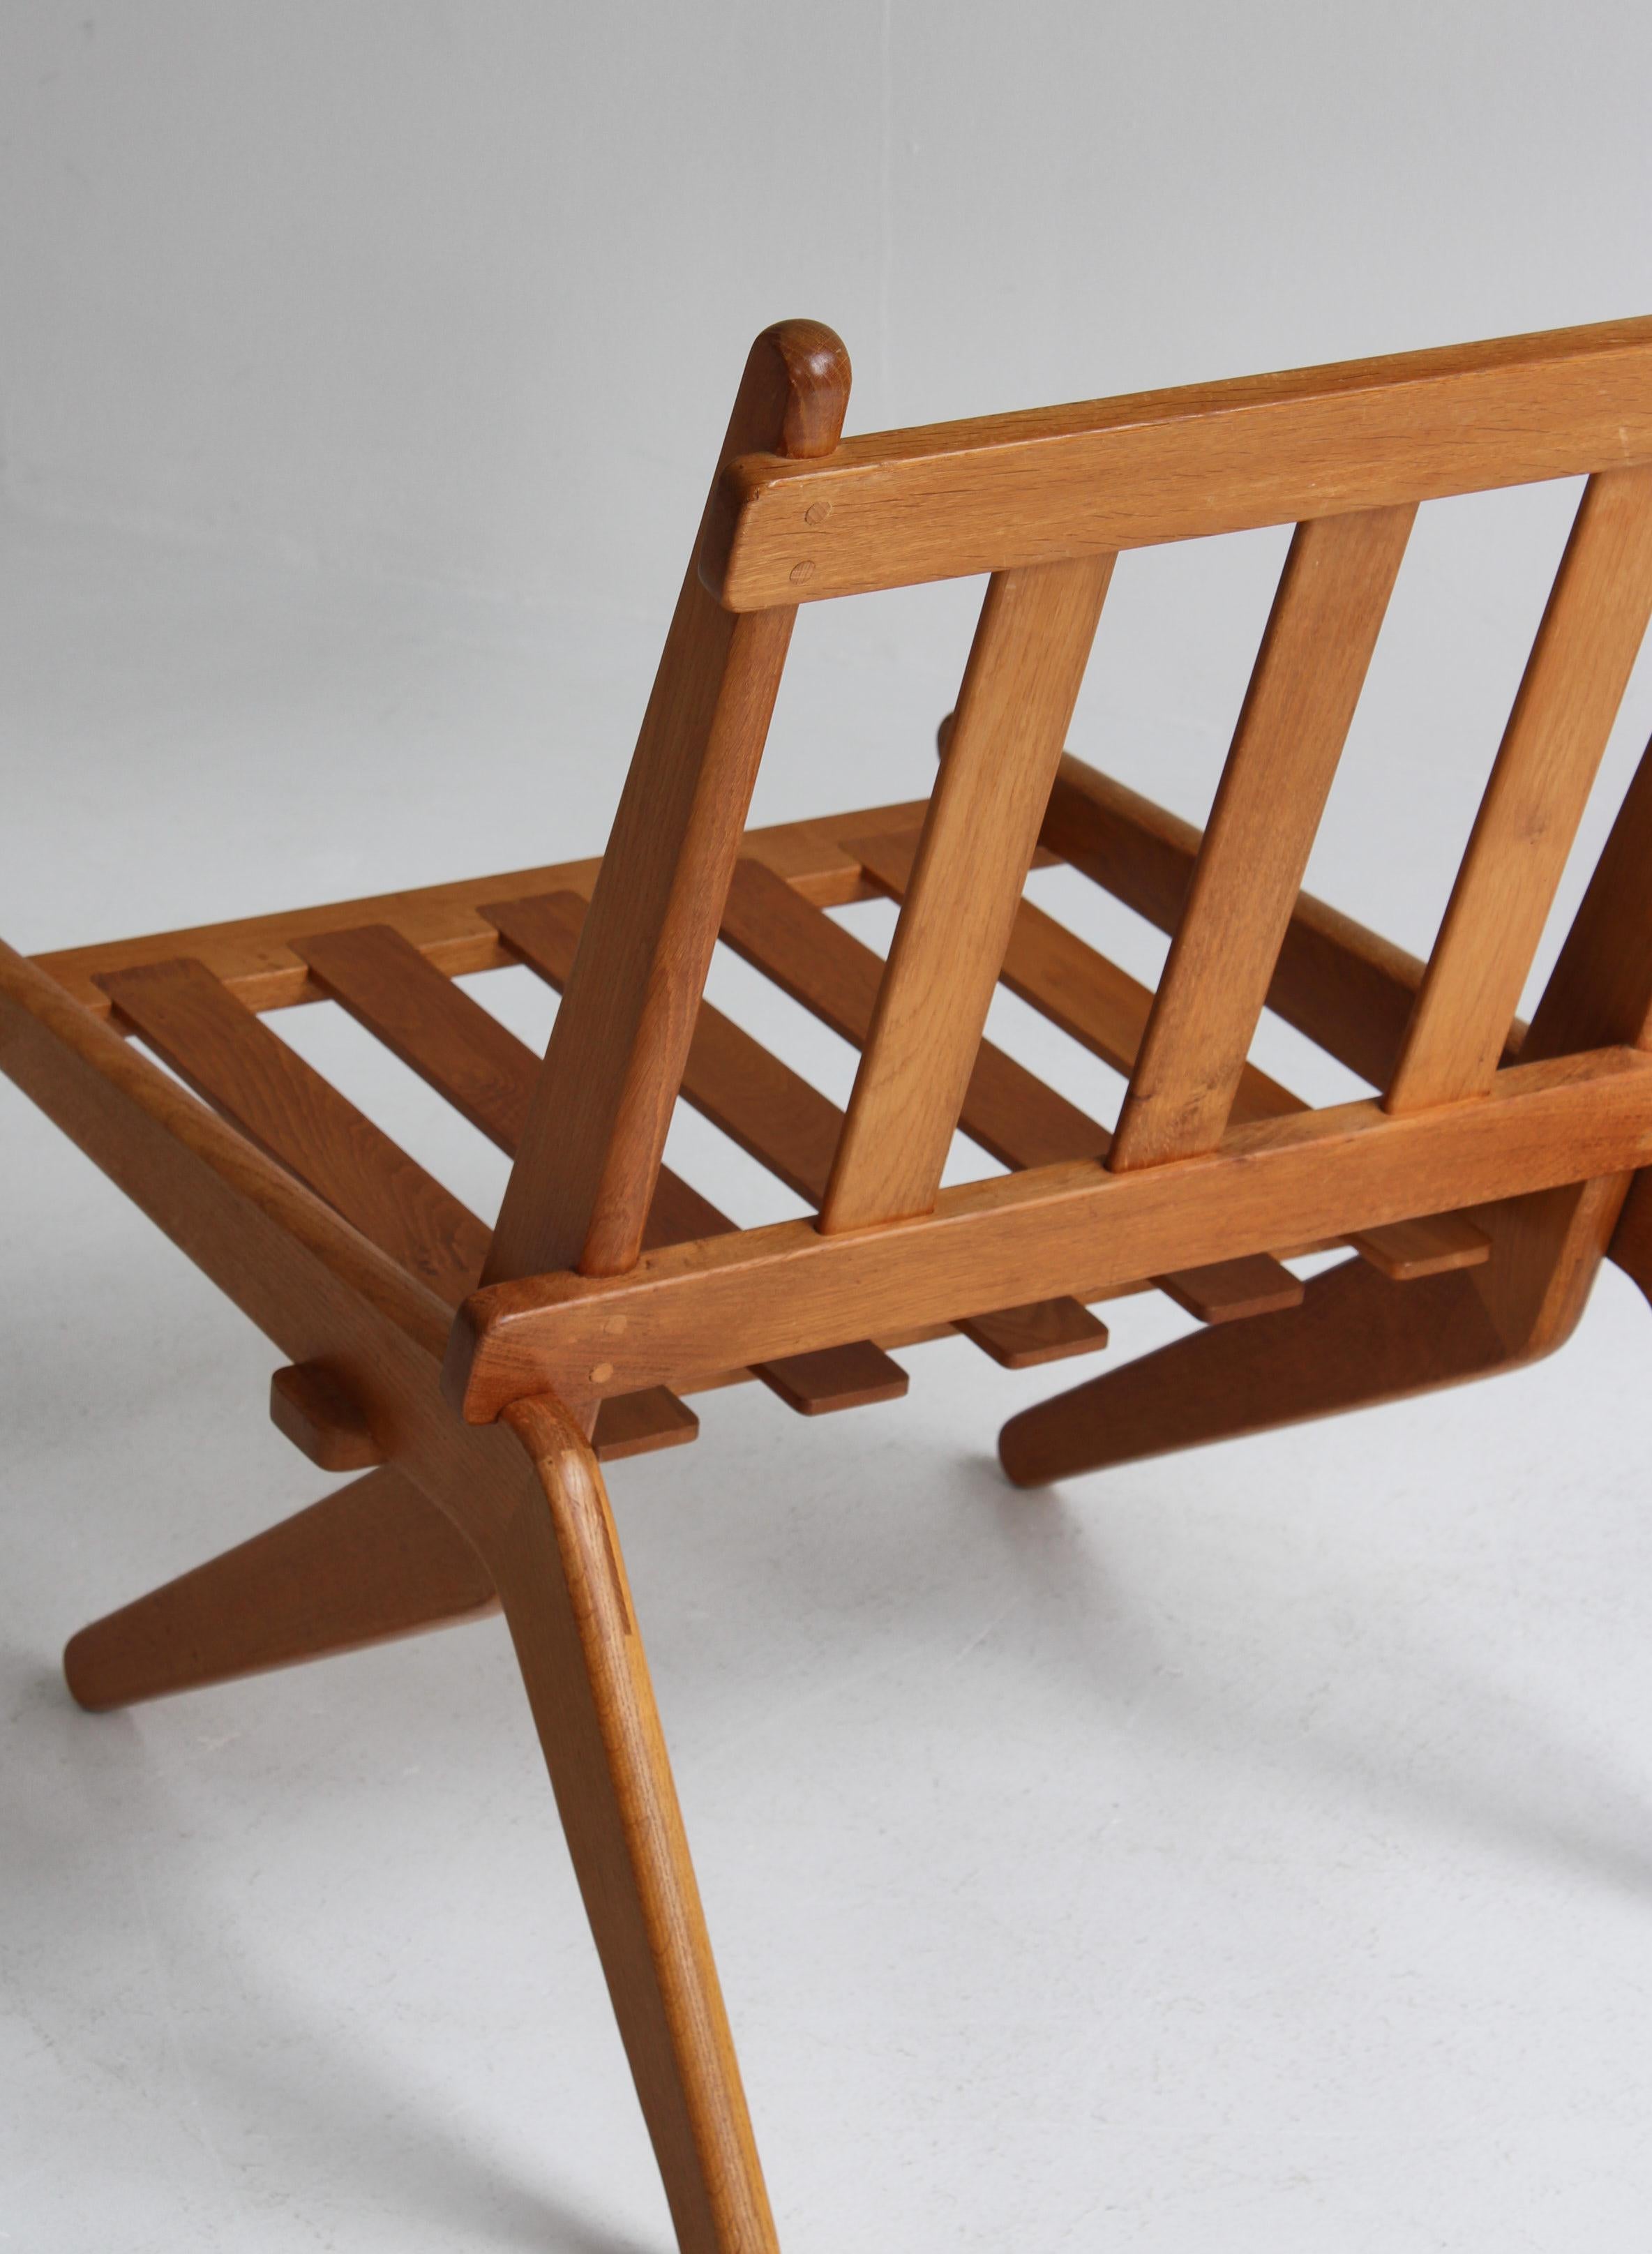 Danish Modern Folding Chair in Oak and Natural Sheepskin, Preben Thorsen, 1950s For Sale 8